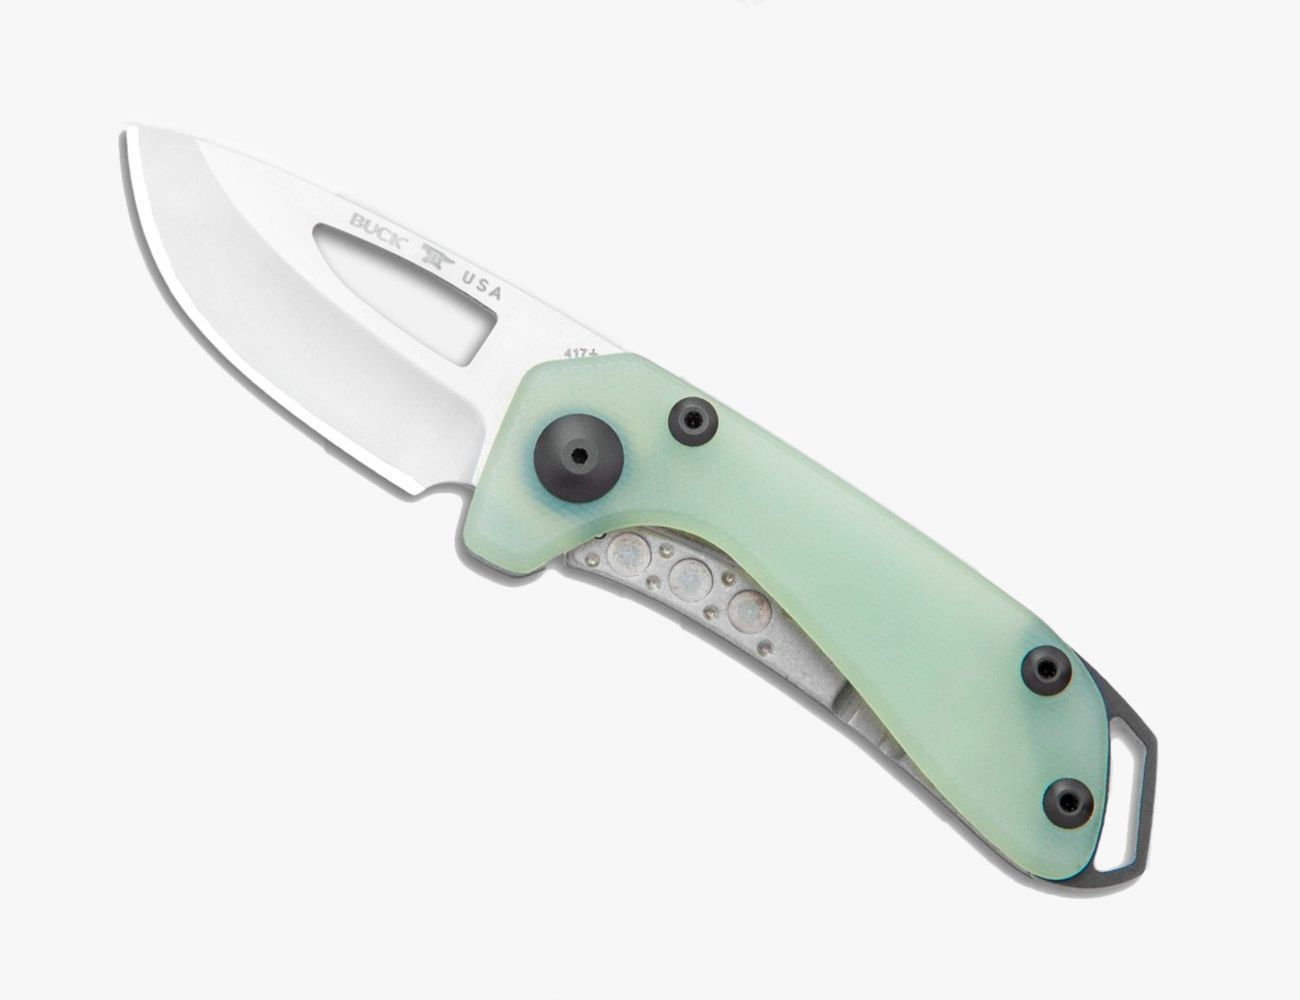 Small Pocket Knife - Folding EDC Blade - Odsgear